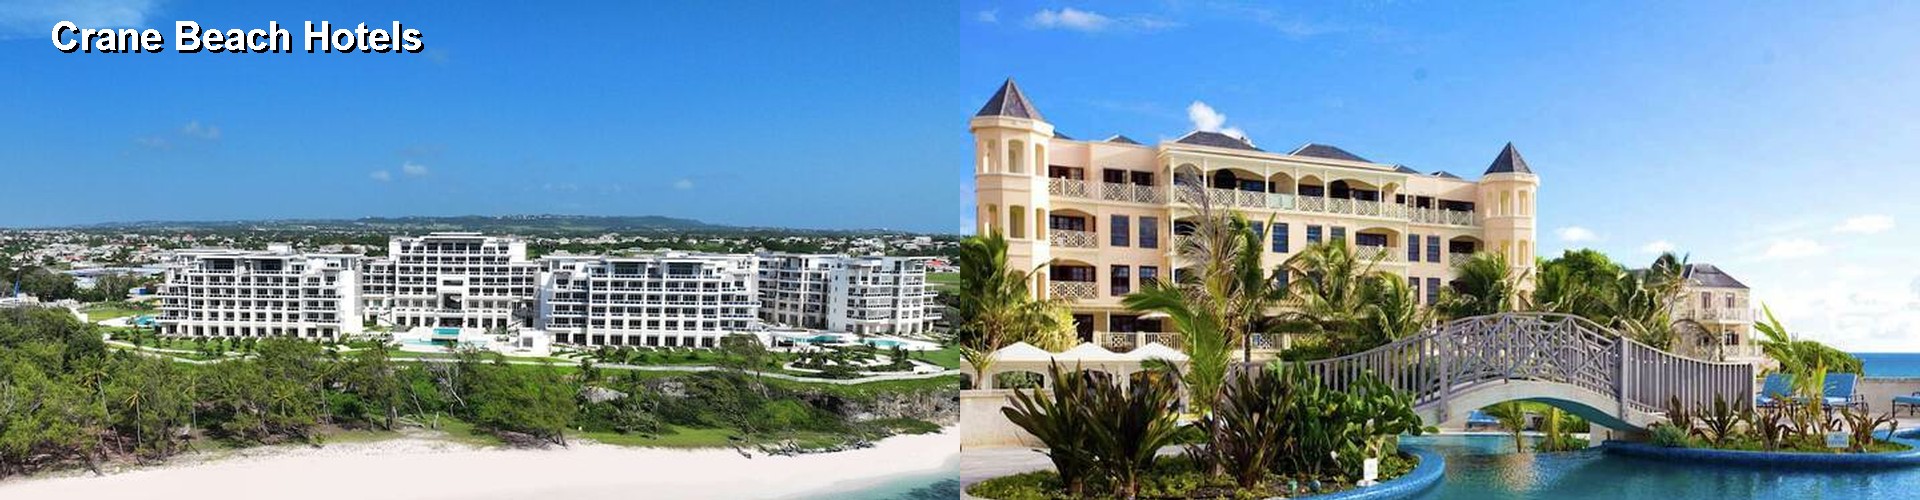 3 Best Hotels near Crane Beach